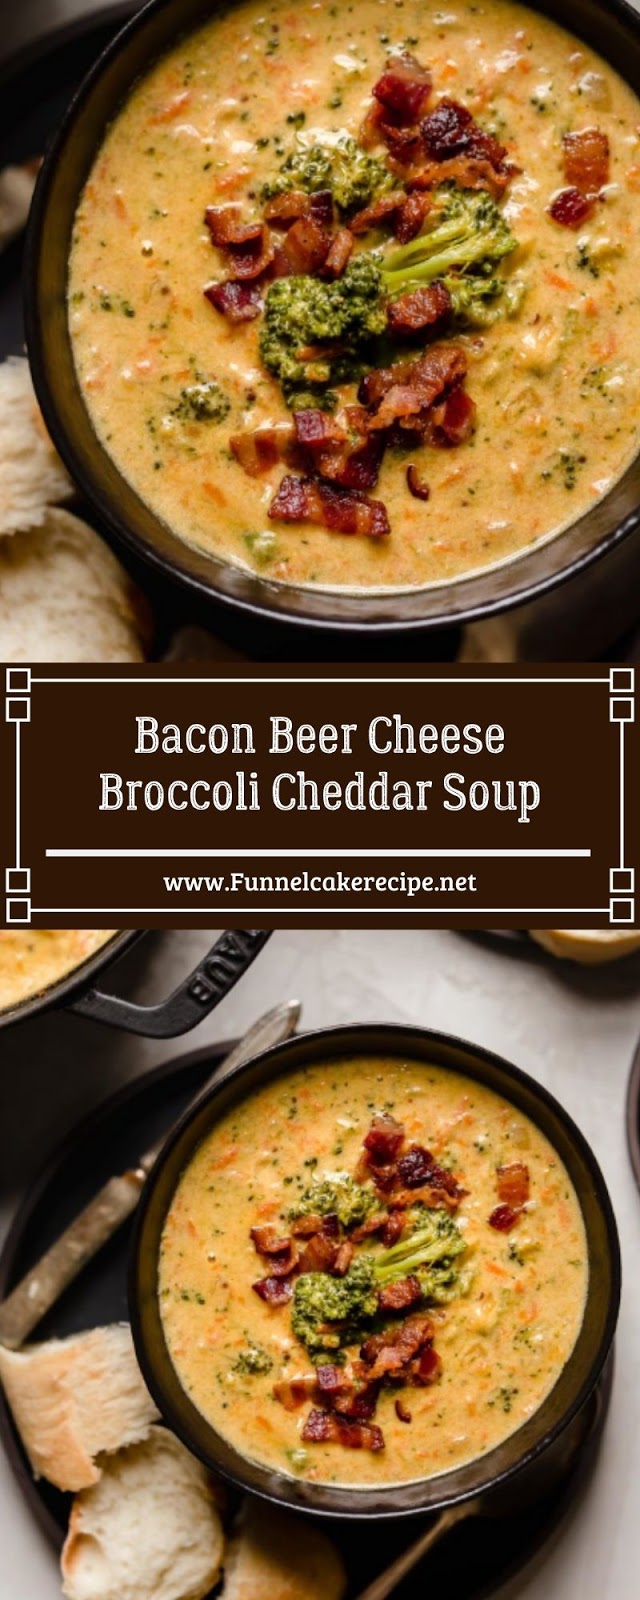 Bacon Beer Cheese Broccoli Cheddar Soup